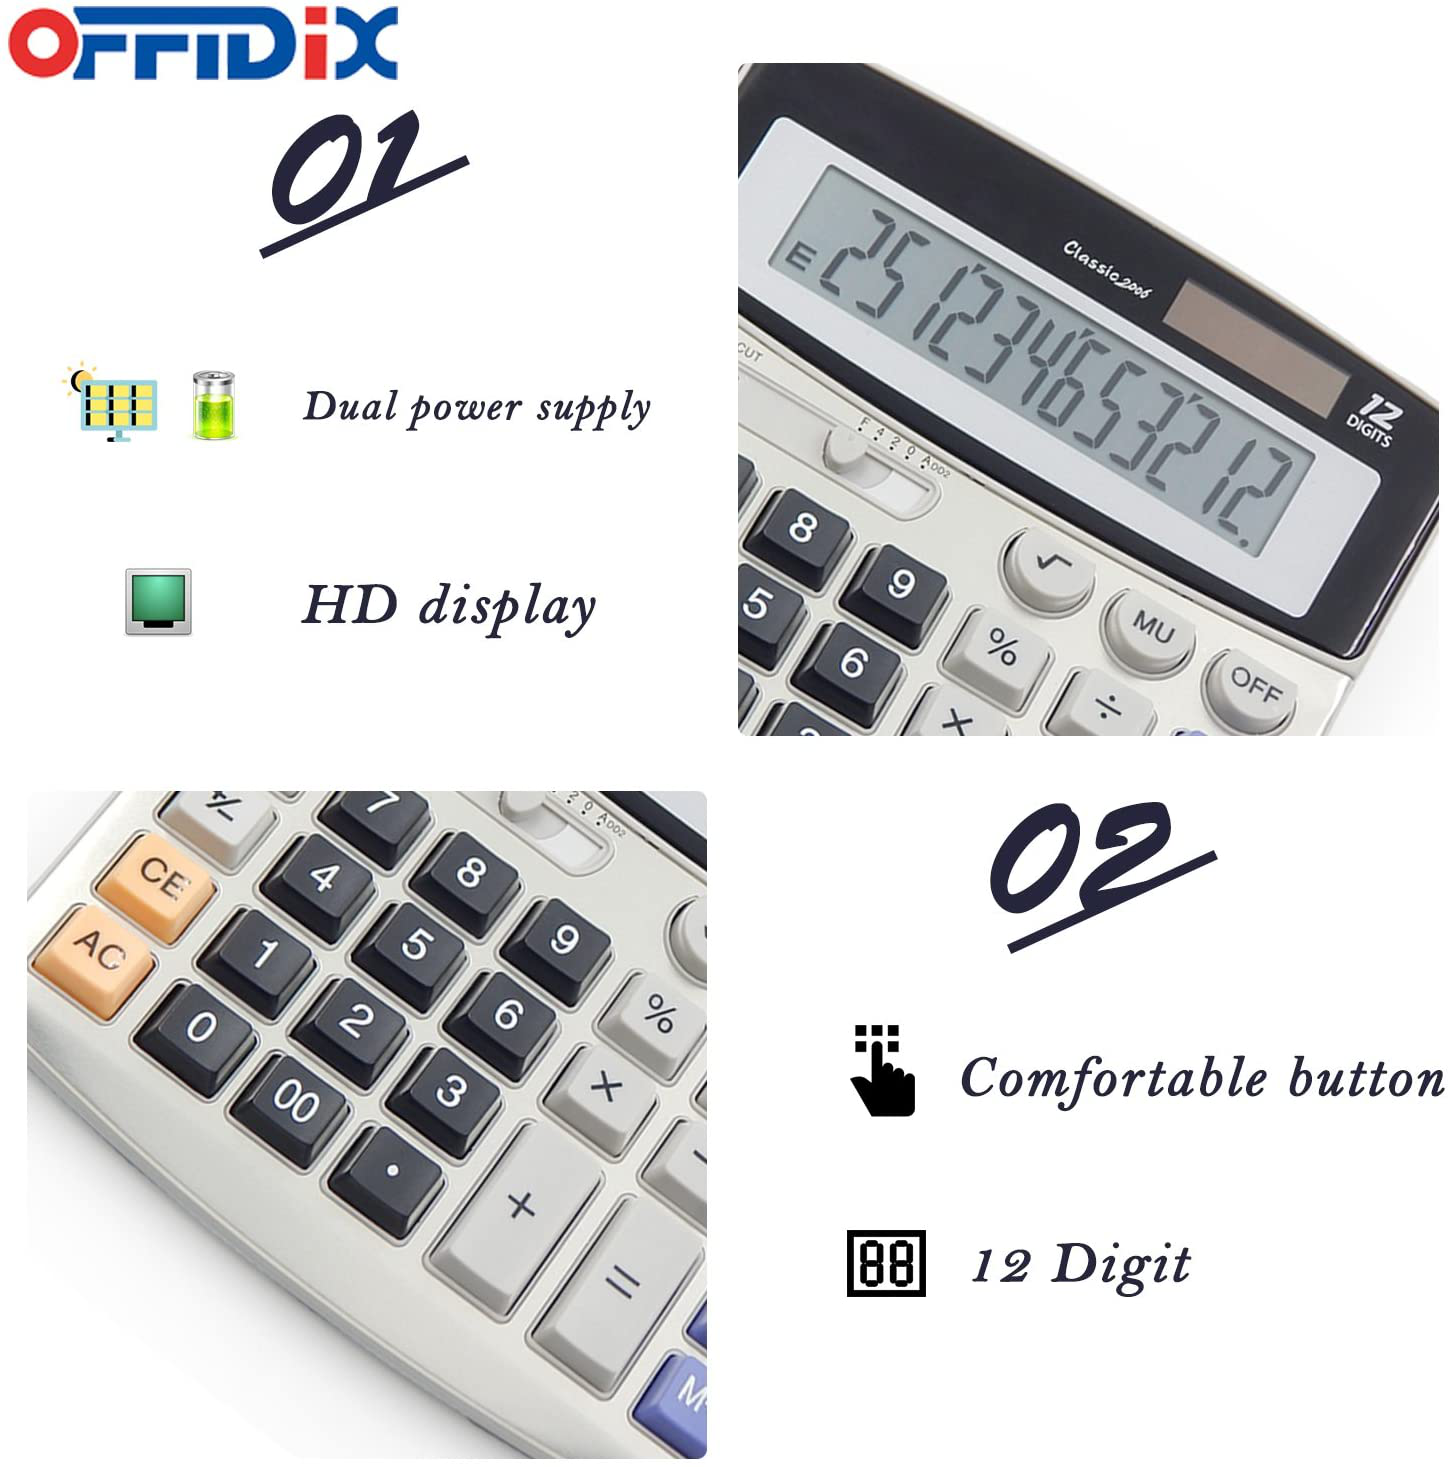 OFFIDIX Office Calculators Desktop Calculator,Basic Calculators, Solar Battery Dual Power Electronic Calculator Portable 12 Digit Large LCD Display Calculator Large Calculator